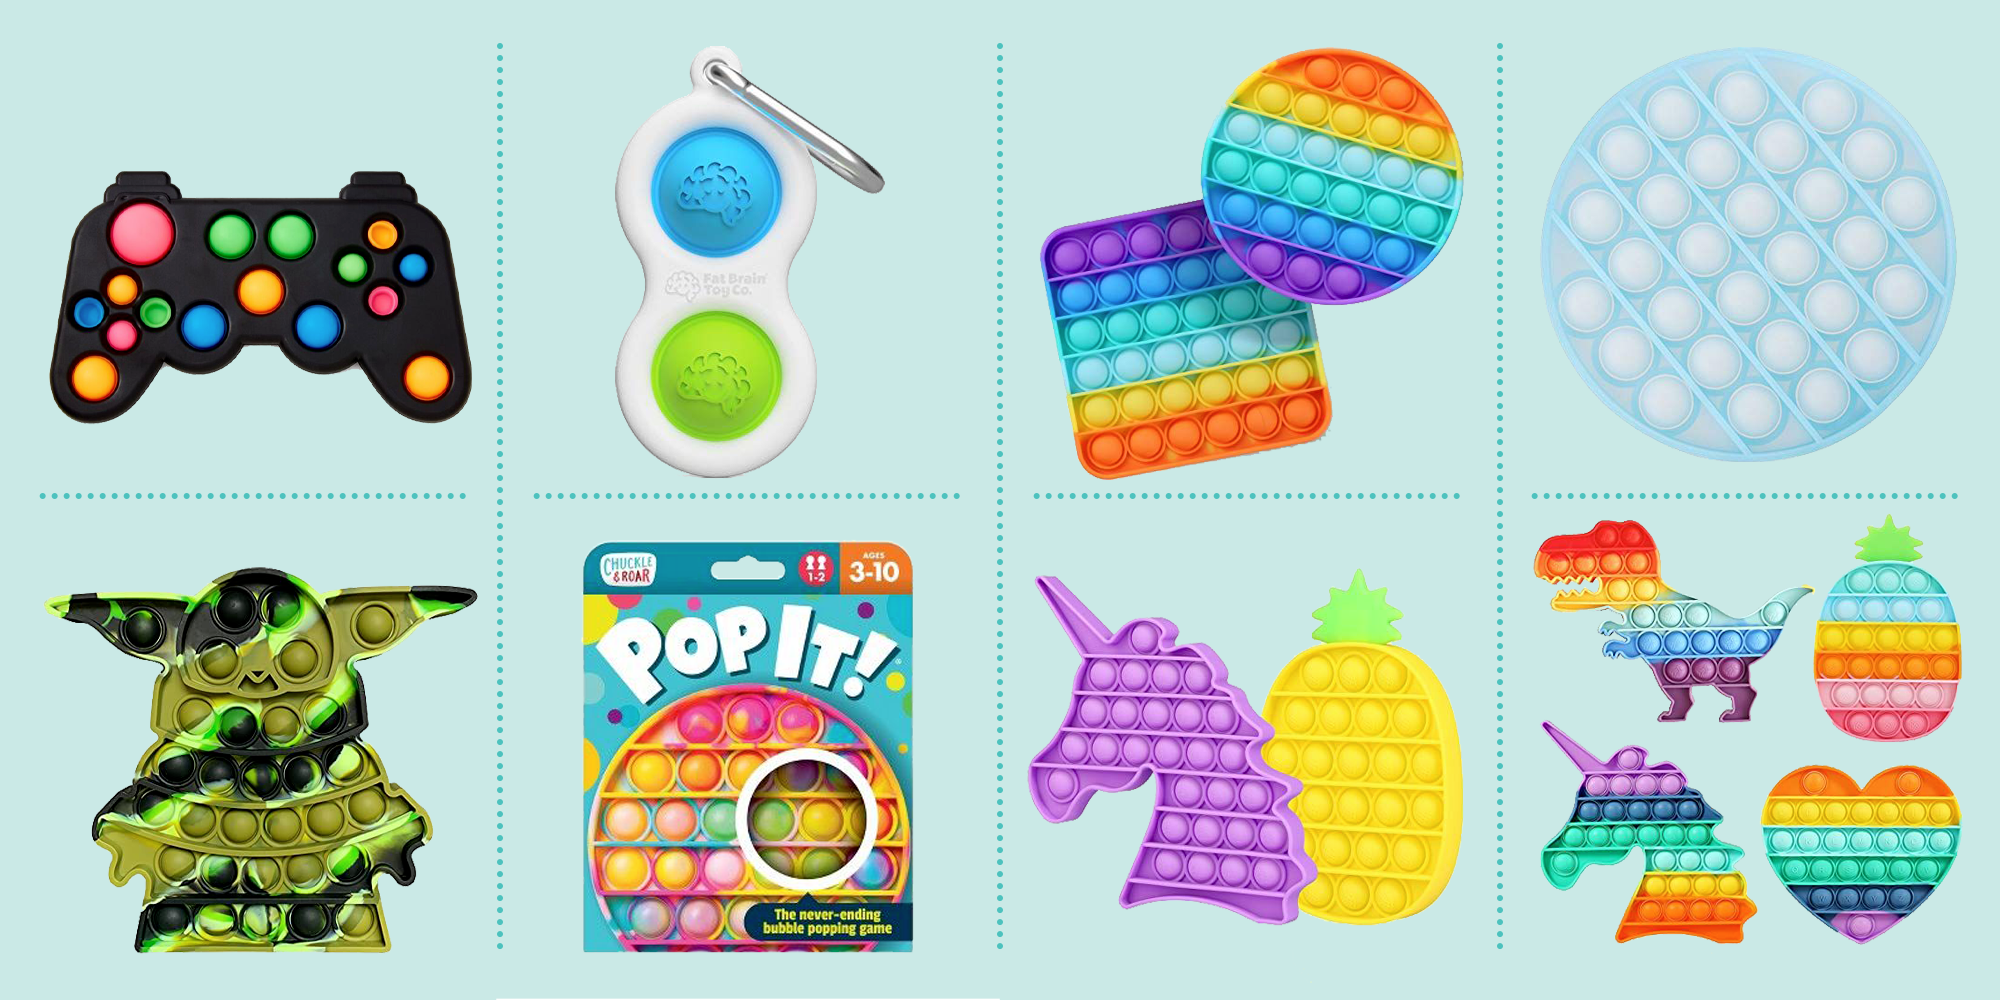 Big Jumbo Push Bubble Fidget Toys Stress Relief Popit Games/ ADHD USA  SELLER